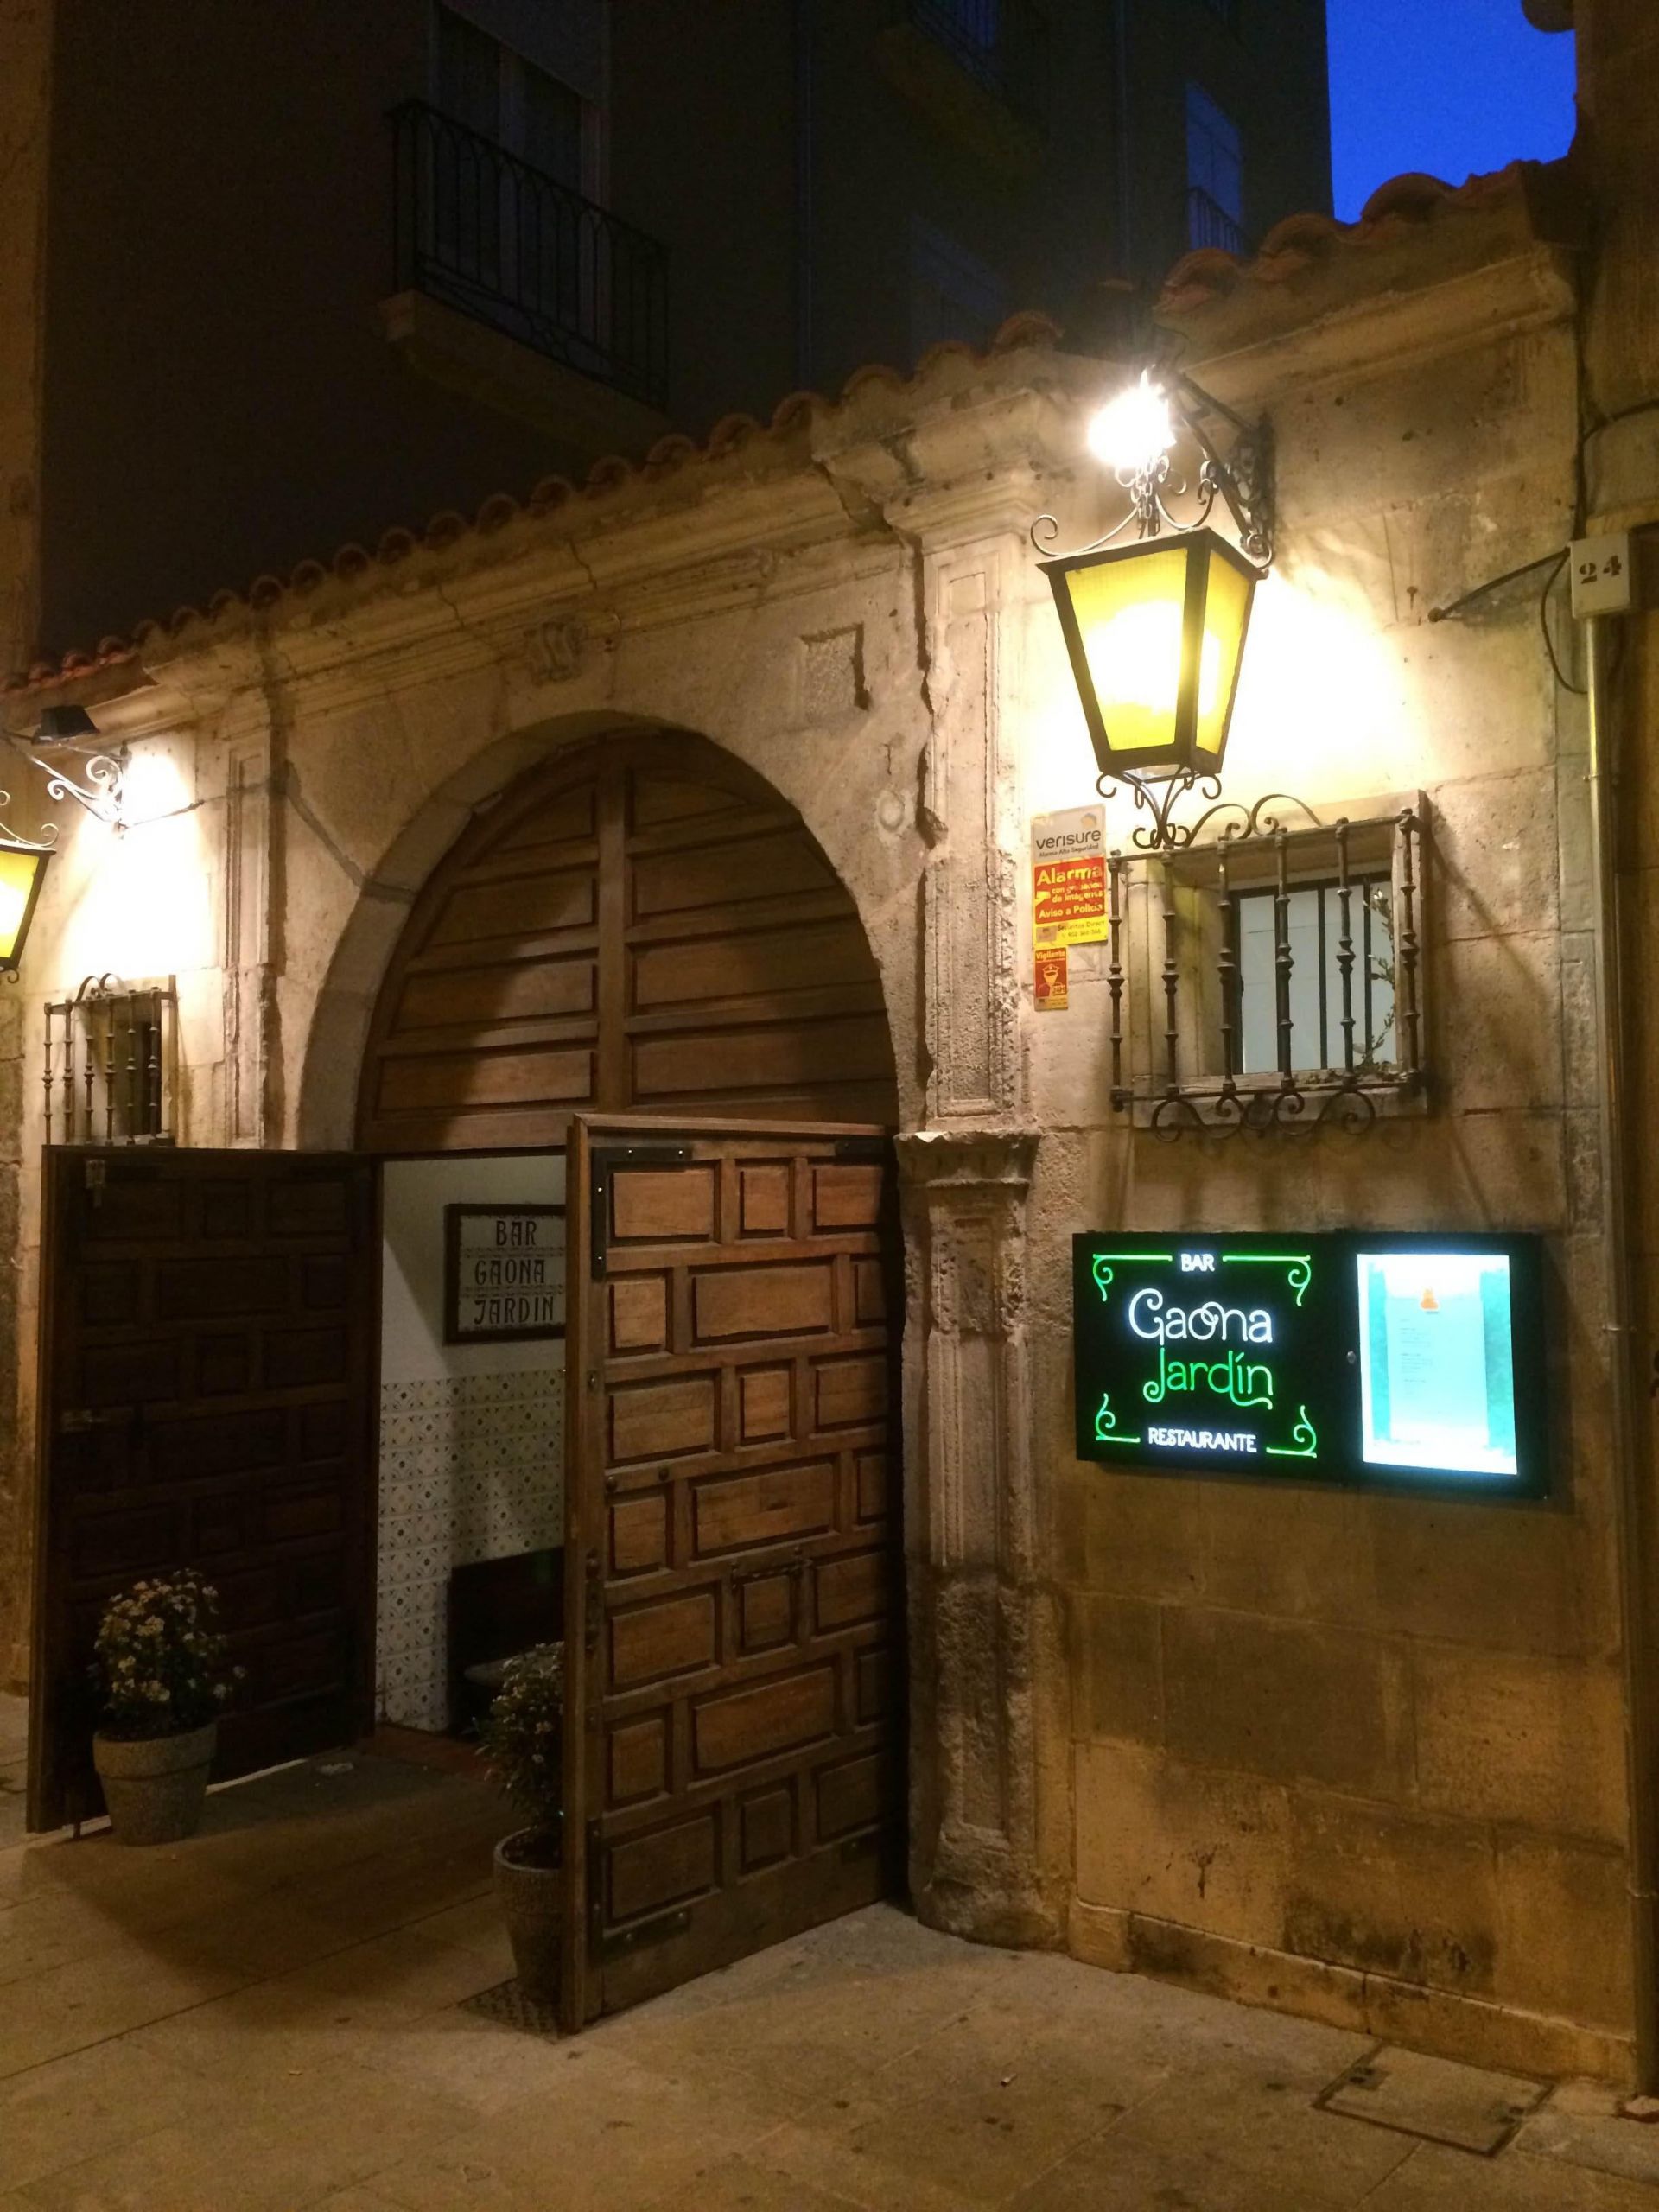 Architecte Jardin Génial Gaona Jardin Bar and Restaurant In Burgos 4 Reviews and 5